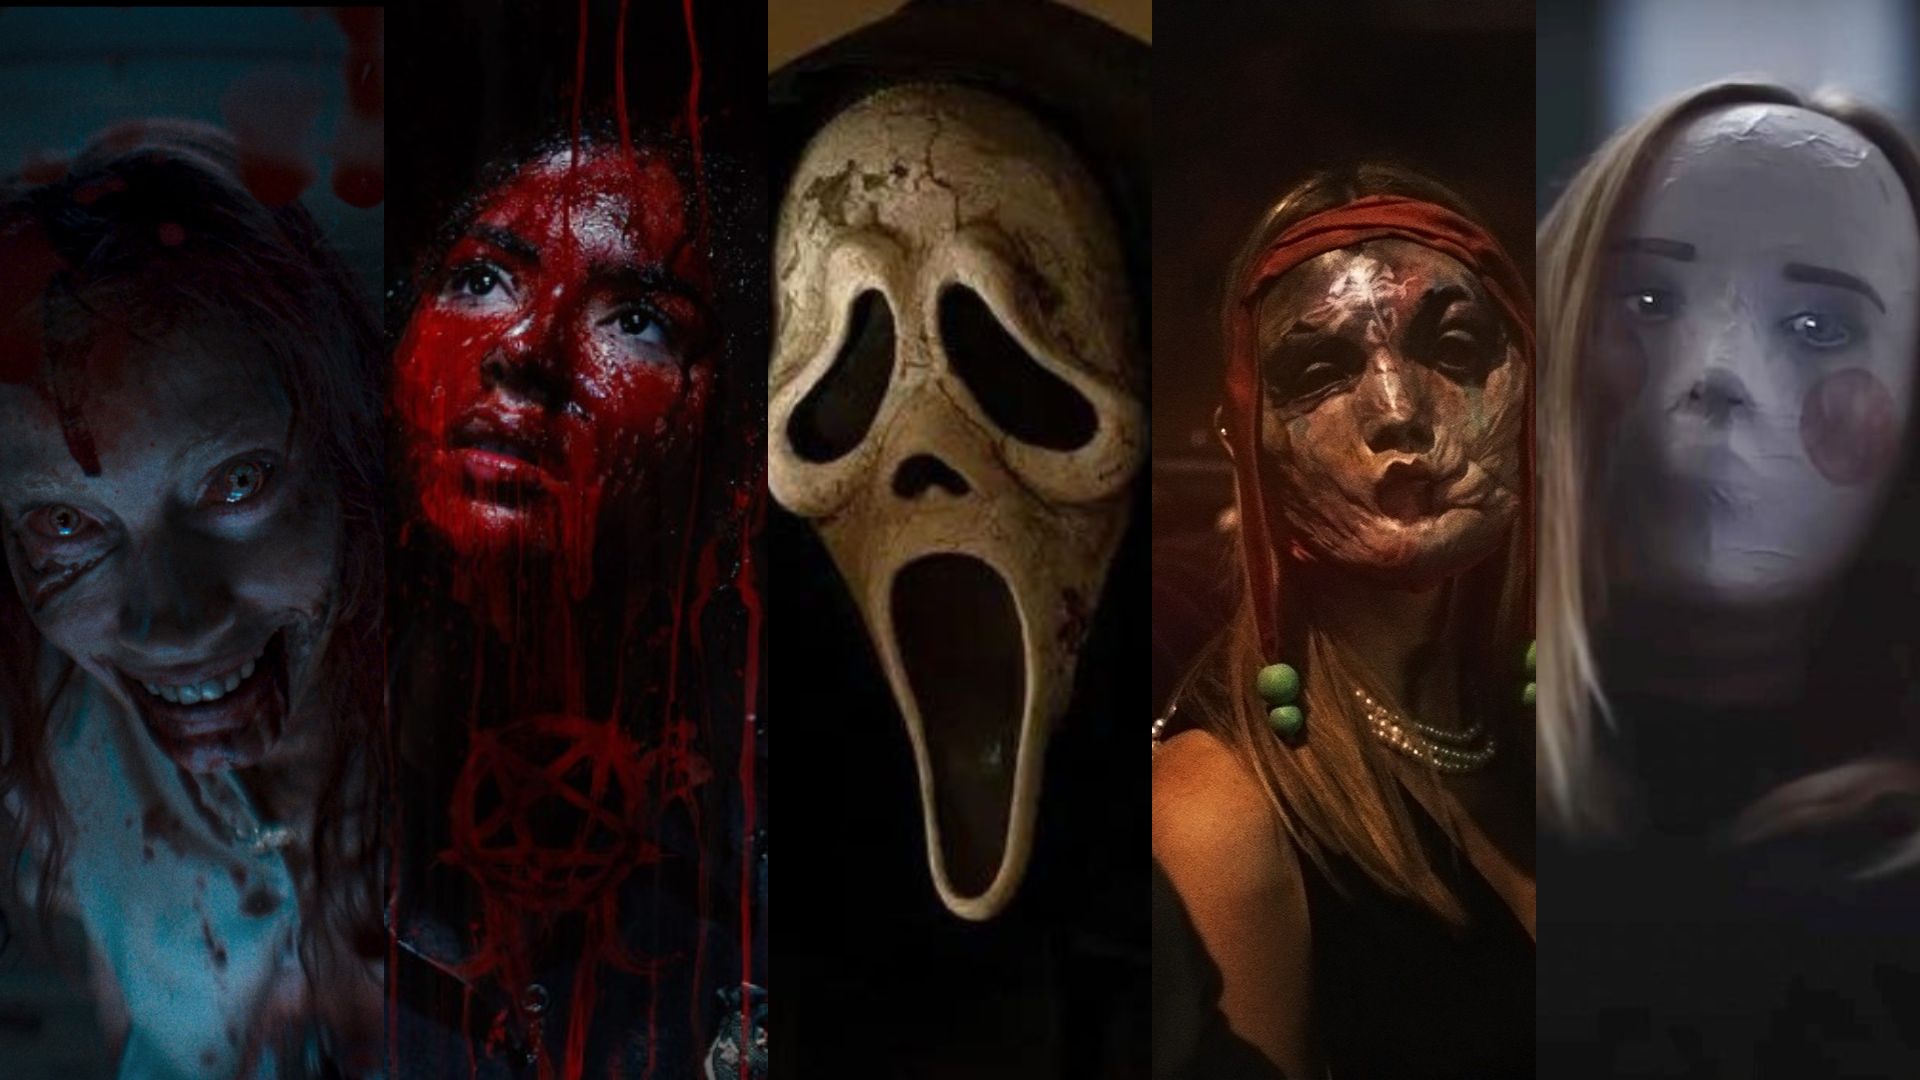 Best Teen Horror and Thriller Series to Celebrate Halloween